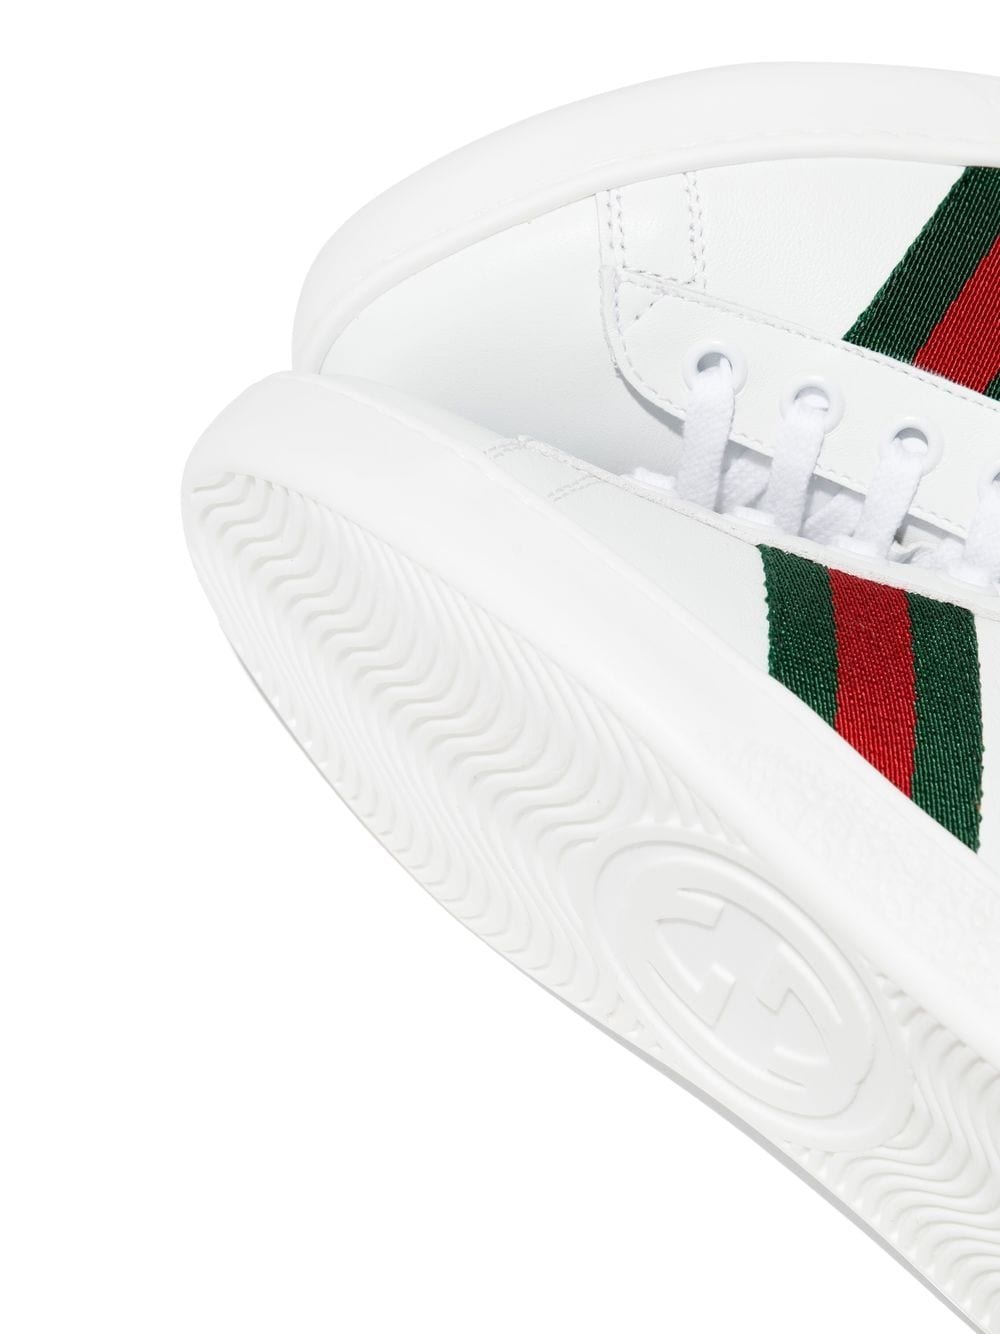 Gucci Kids Ace Web-stripe sneakers White